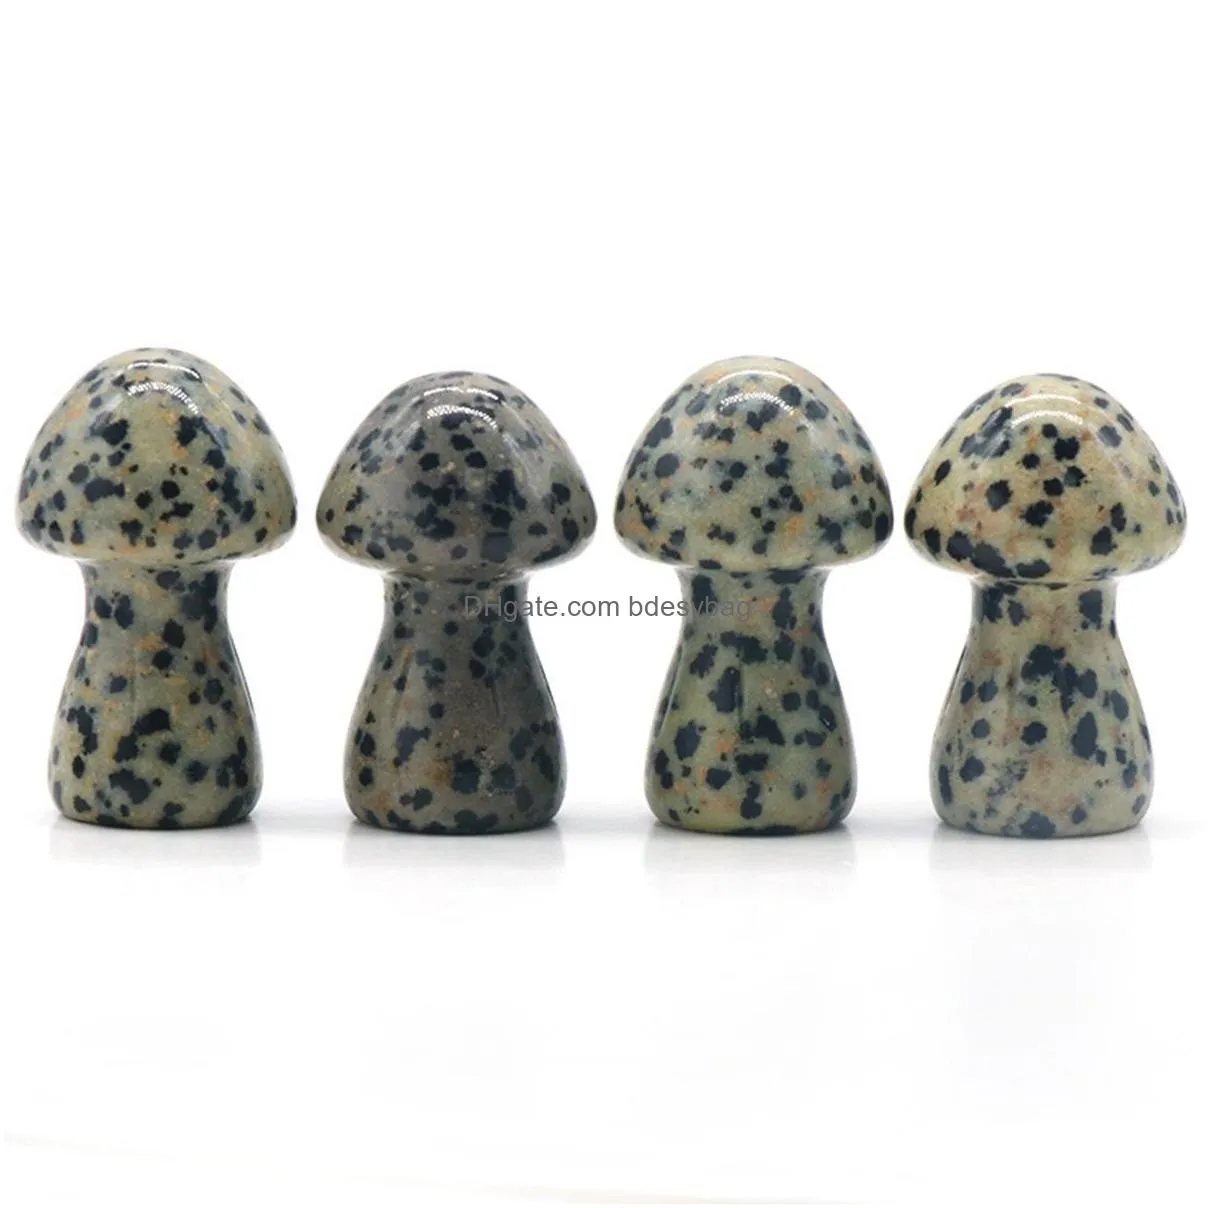 35mm natural 7 chakra gemstone mushroom shape figurine carved crystal plant statue healing hand carved stone for decoration